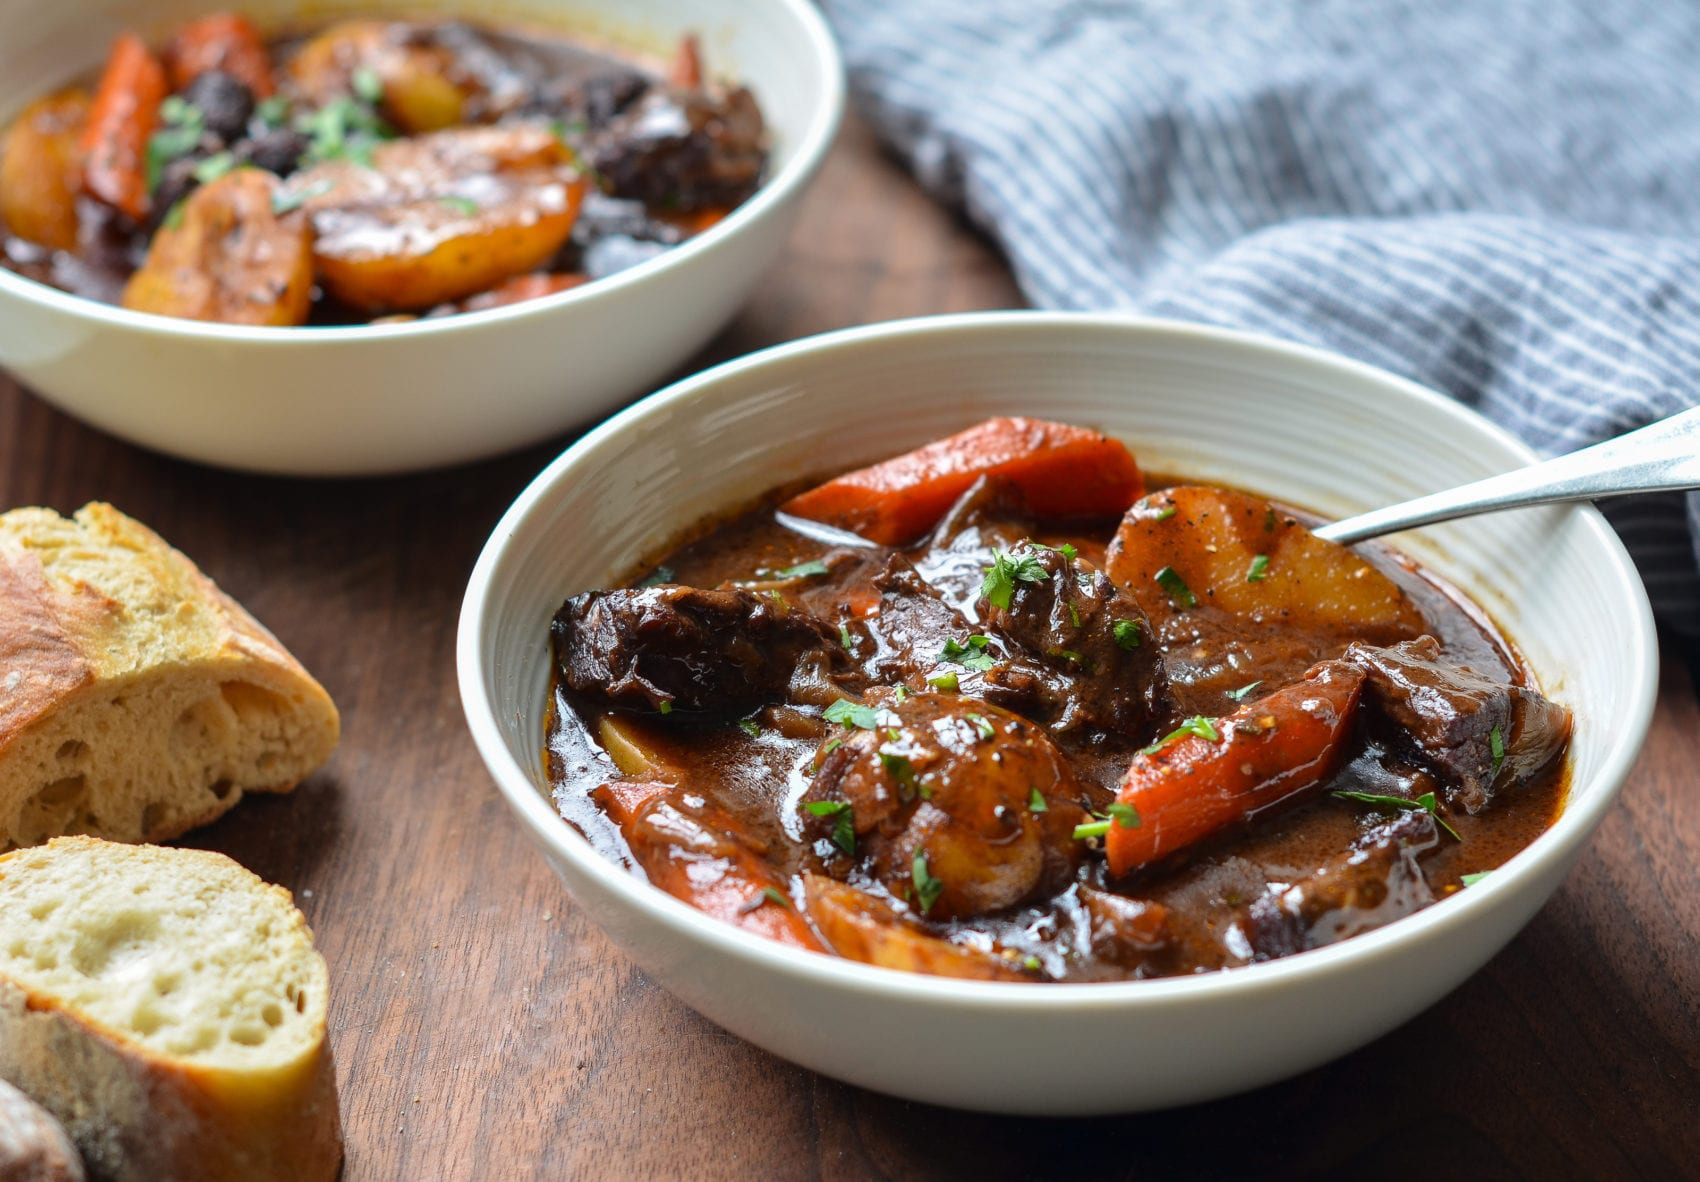 https://www.onceuponachef.com/images/2011/02/beef-stew-with-carrots-potatoes.jpg